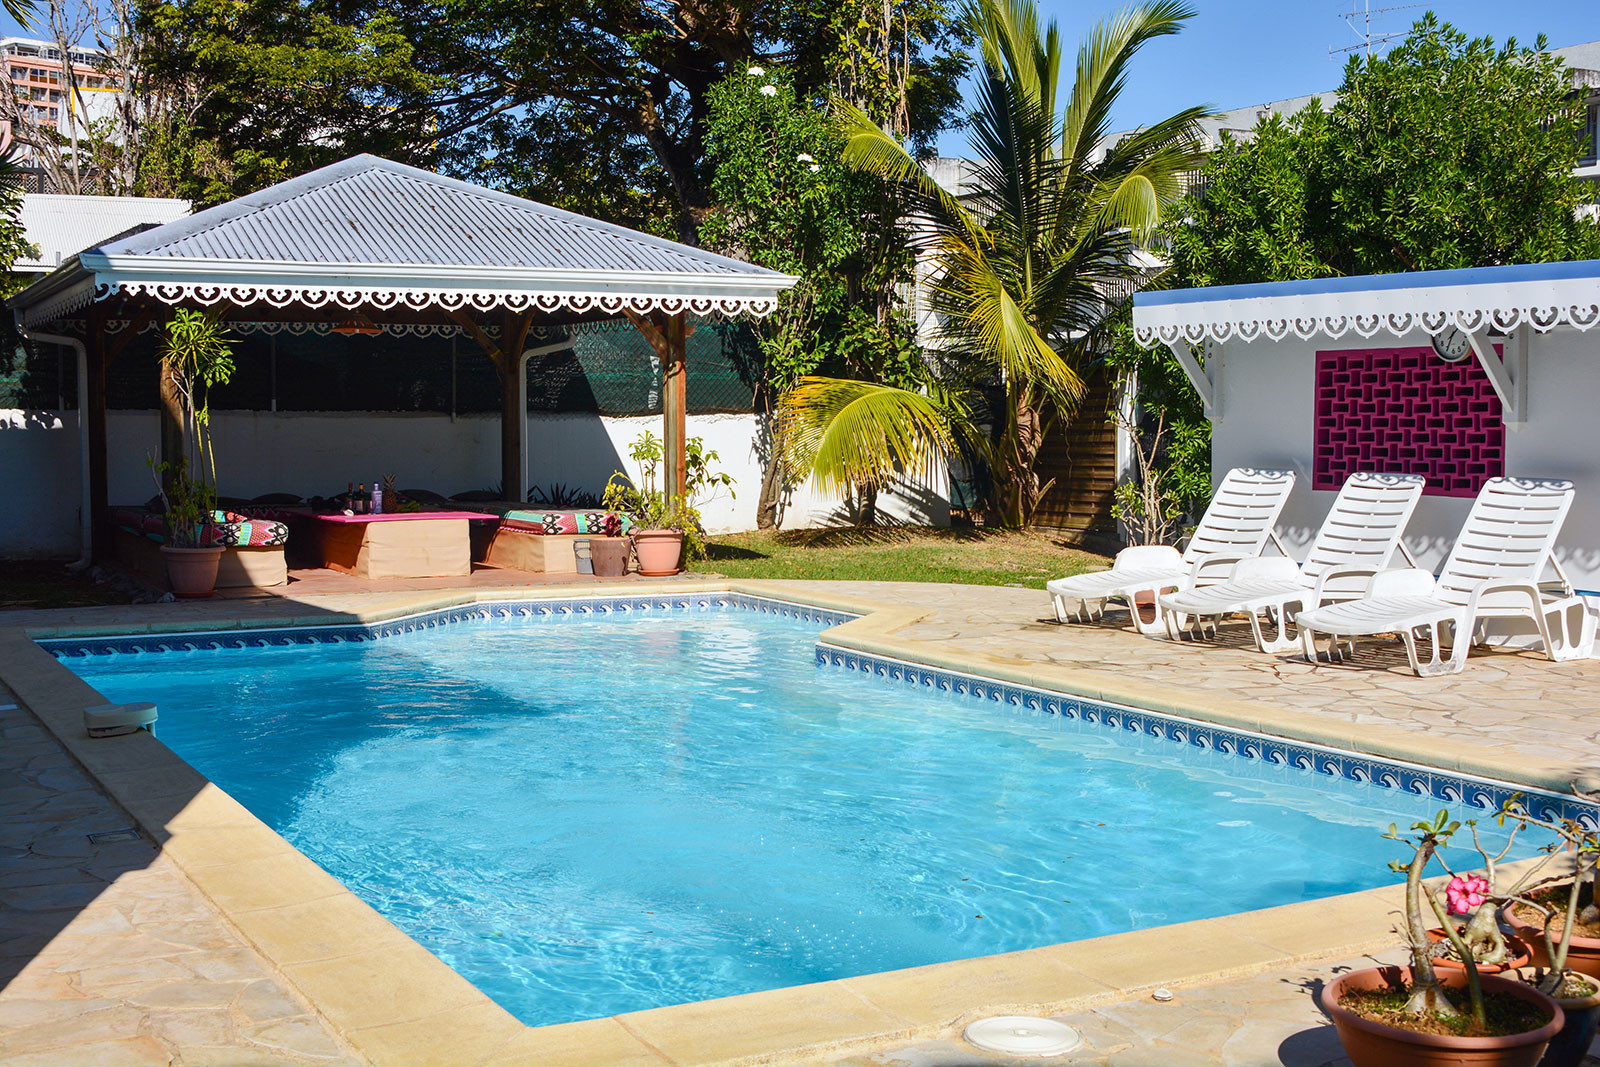 SOLEIL BLEU F2 rental Fort de France Martinique - Bienvenue à la piscine de Soleil Bleu